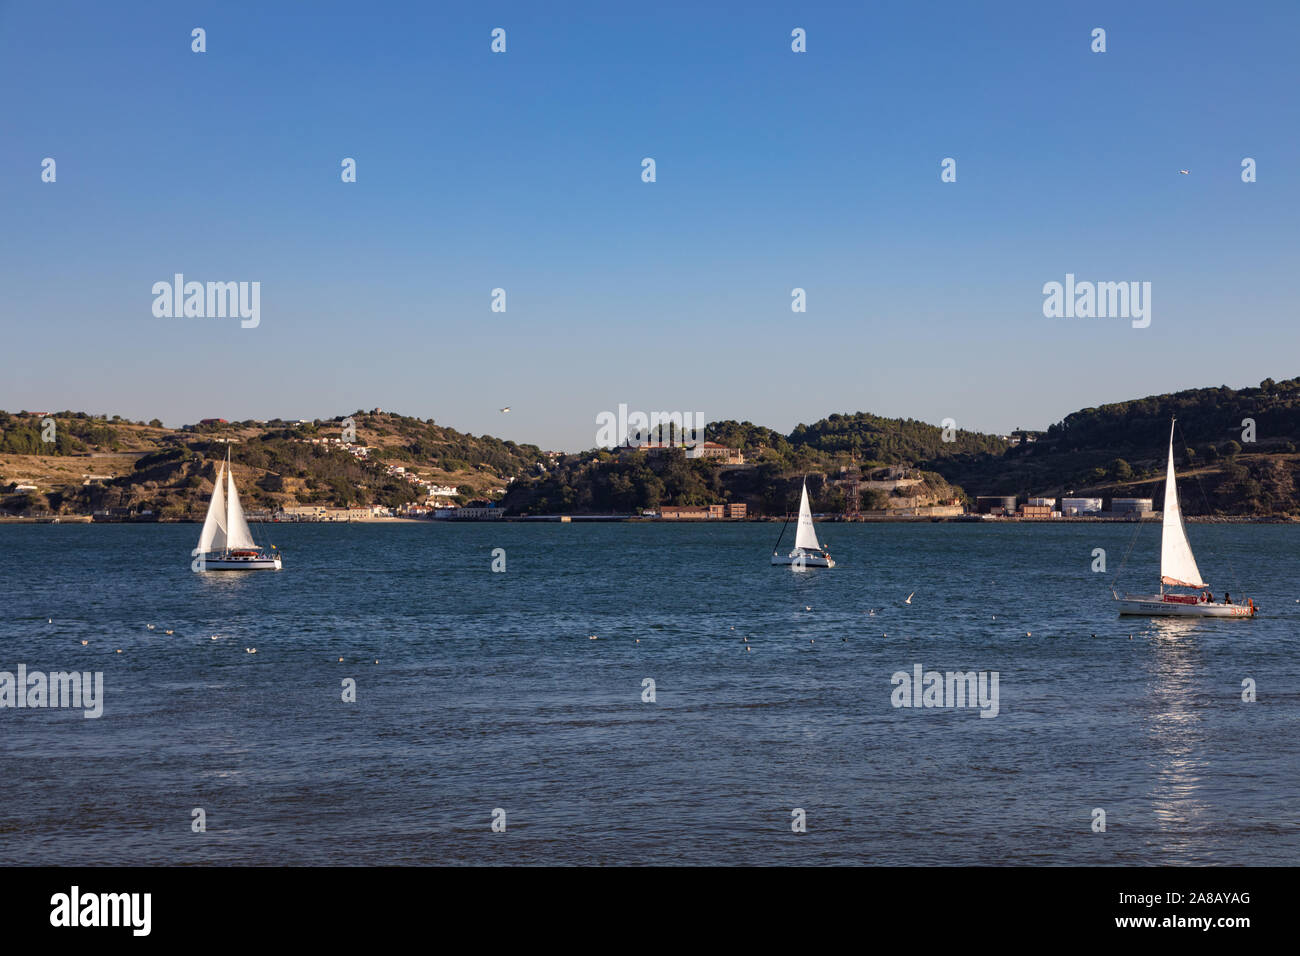 Sailboats sailing on the Tagus river, Lisbon, Portugal Stock Photo